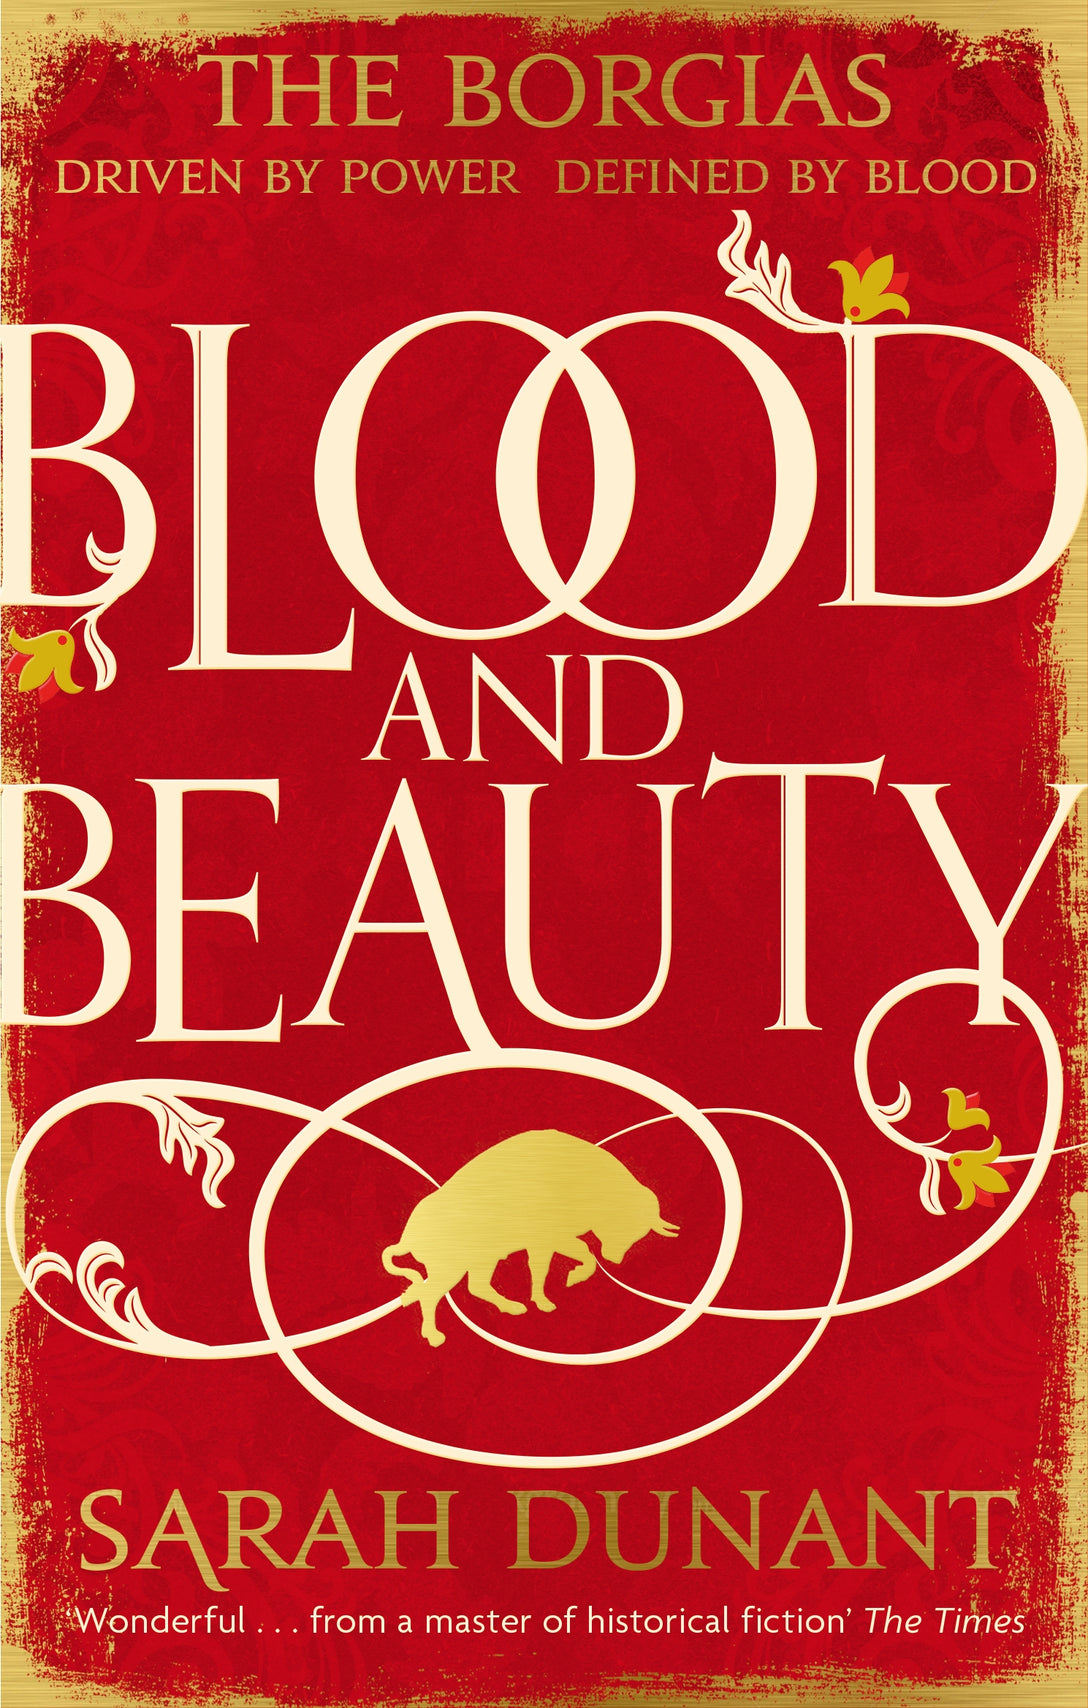 Blood & Beauty by Sarah Dunant